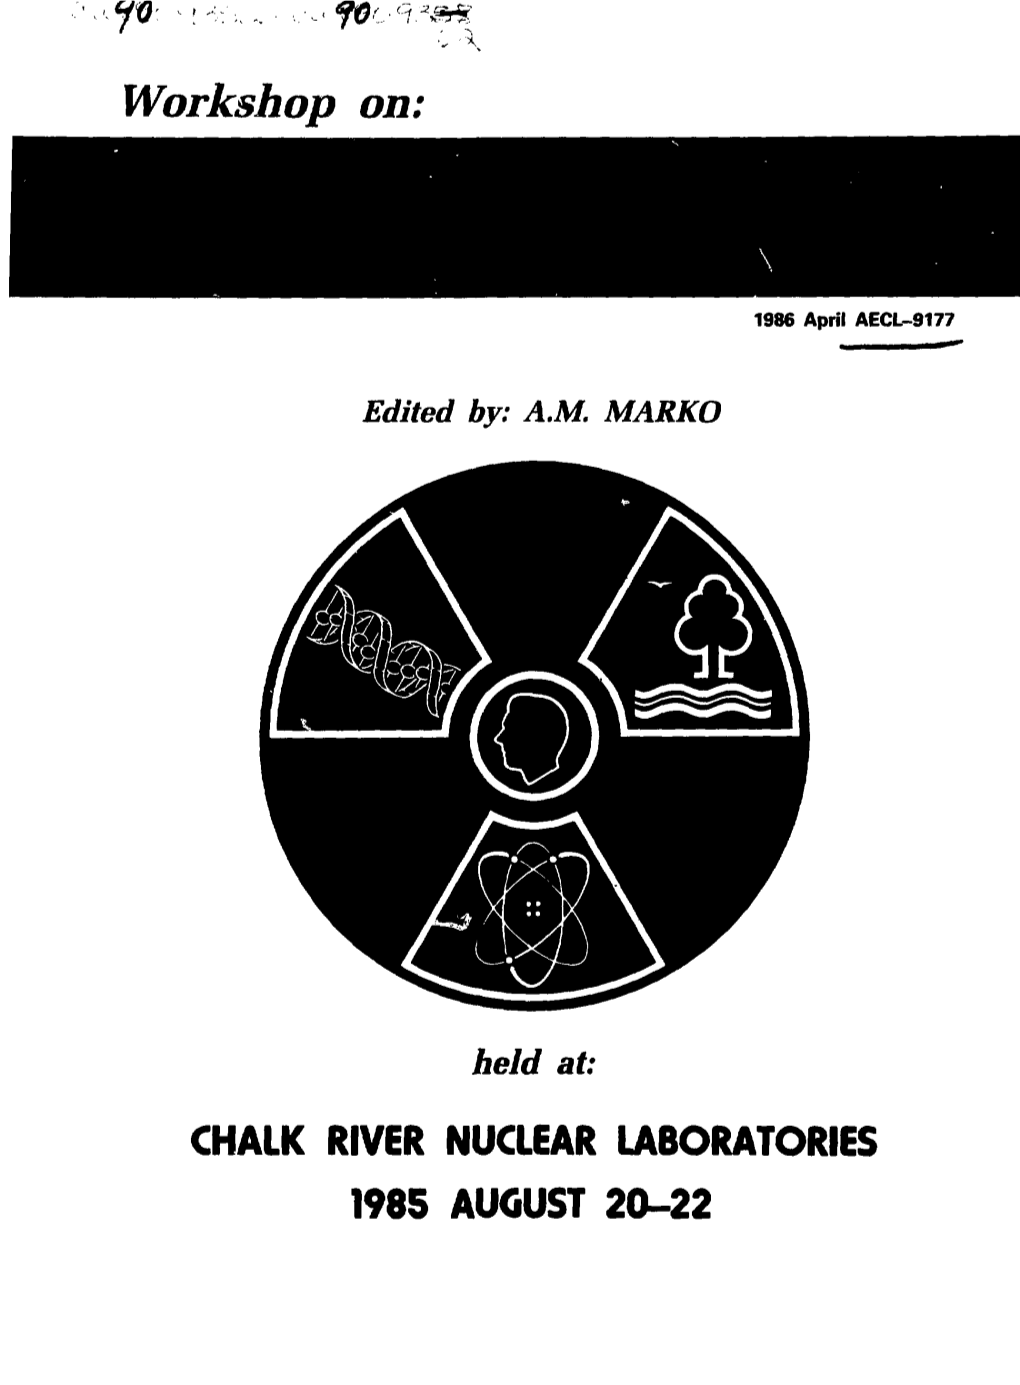 Nuclear Medicine Tomorrow